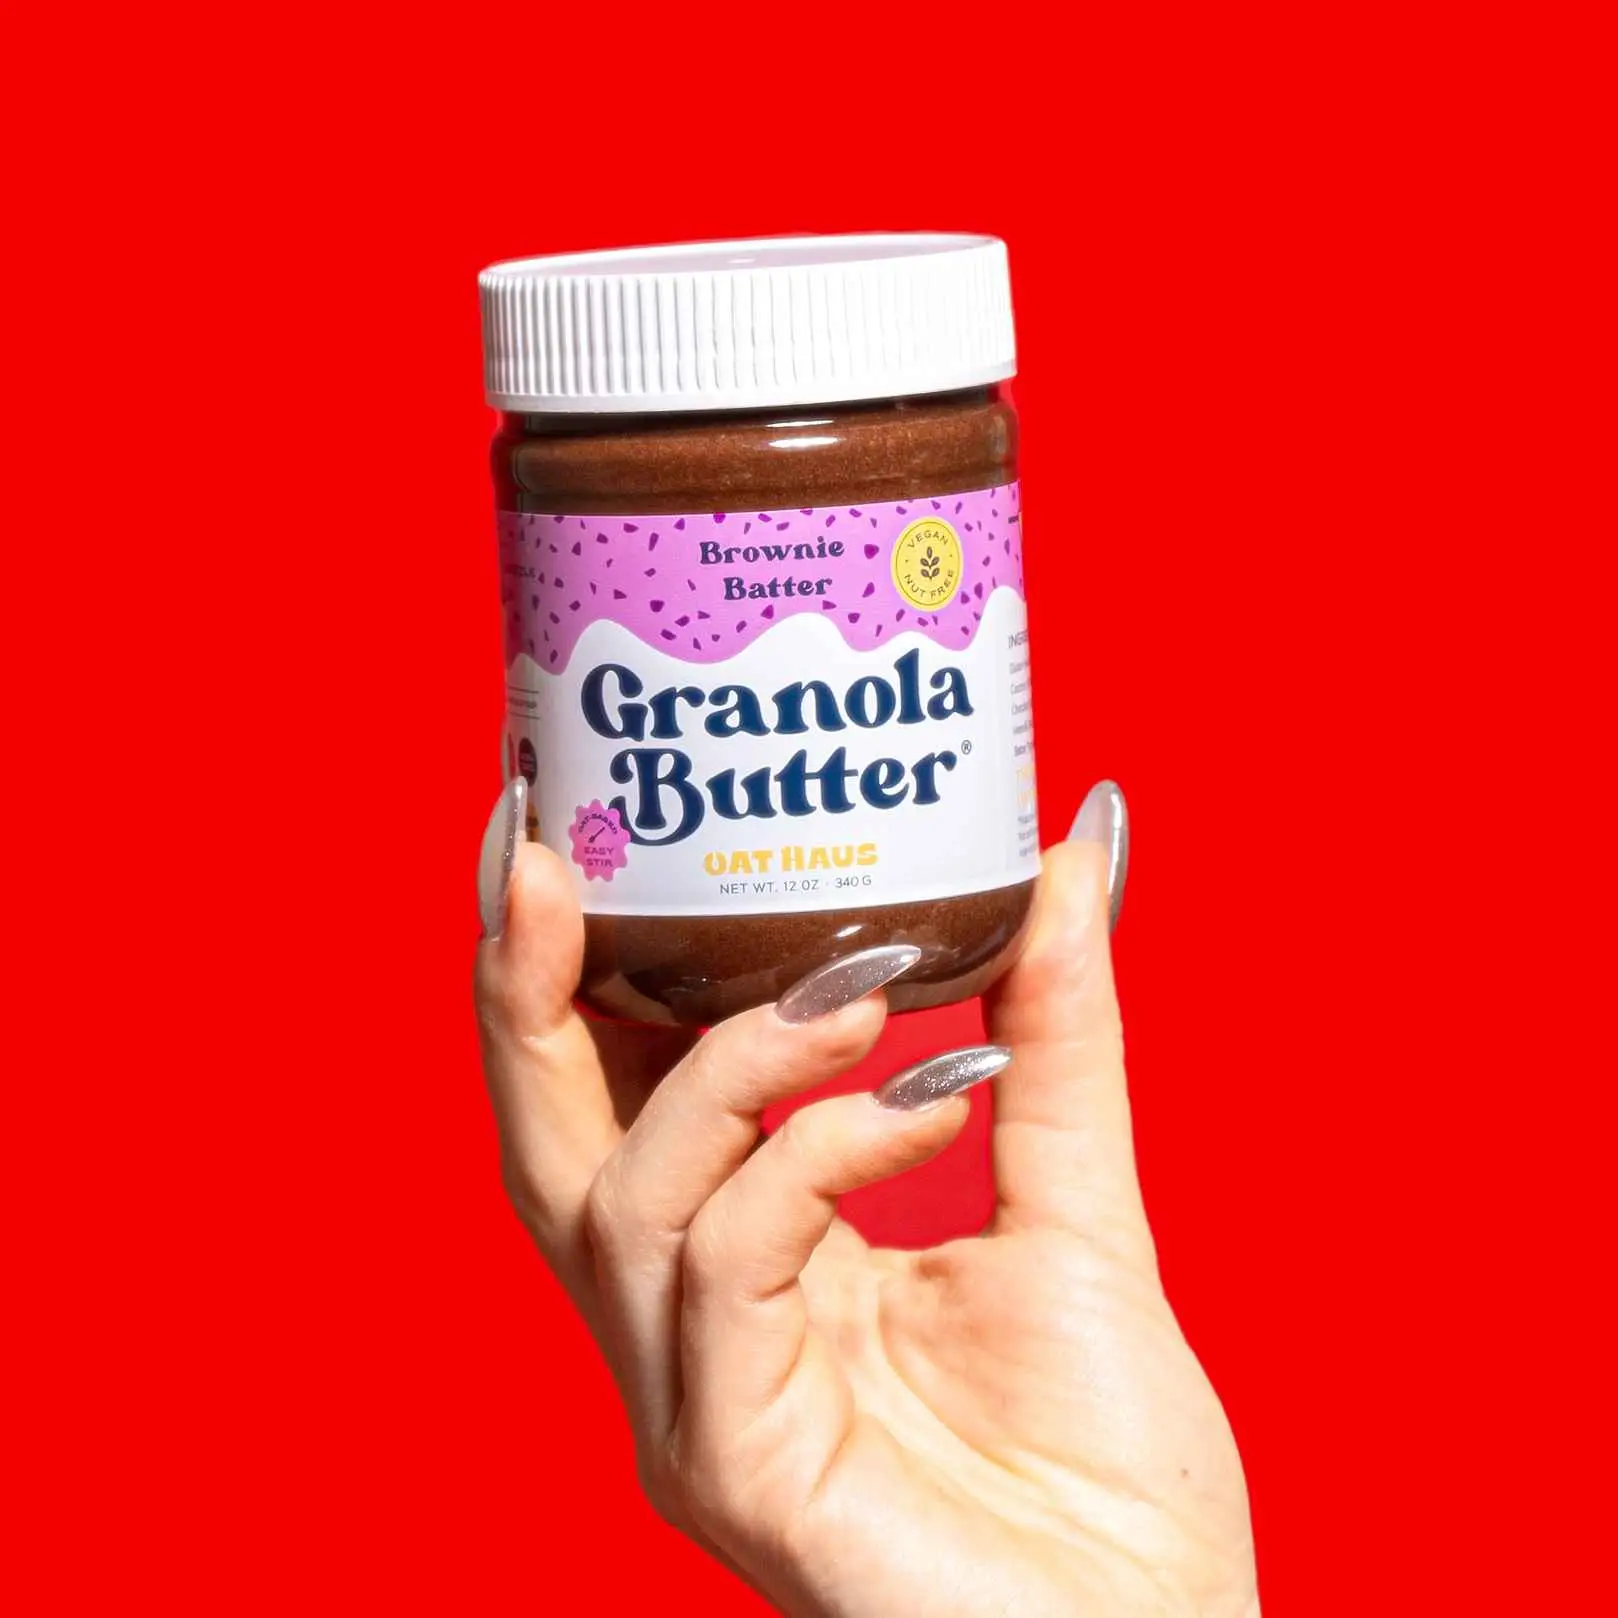 Easy Stir Brownie Batter Granola Butter Delivery